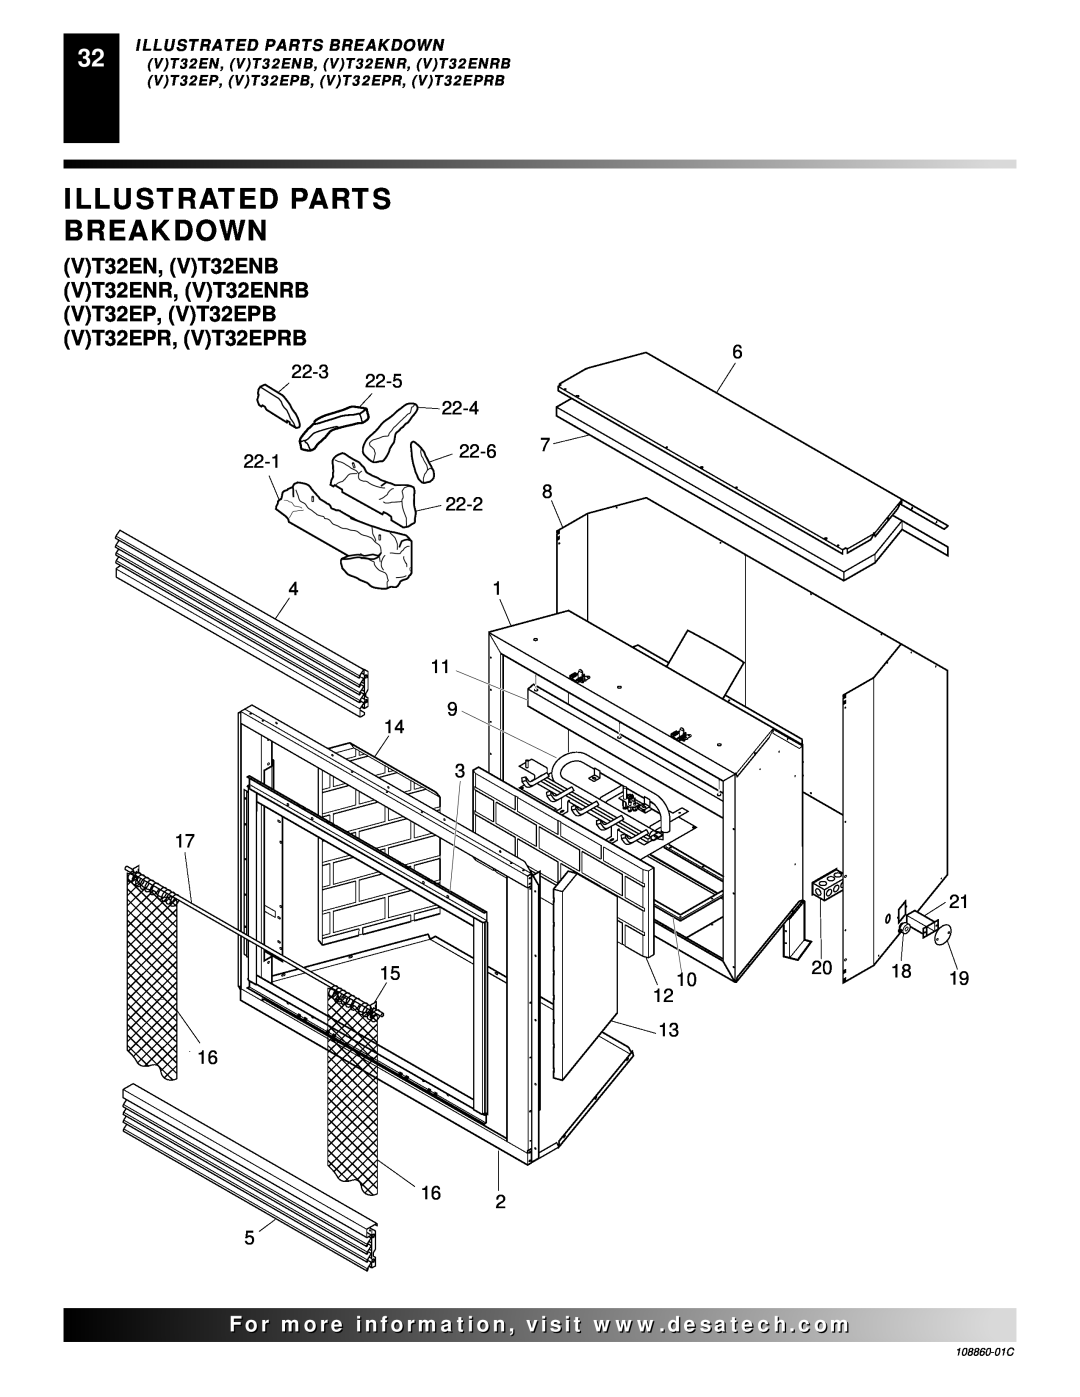 Desa (V)T36EP, (V)T36EN installation manual Illustrated Parts Breakdown 